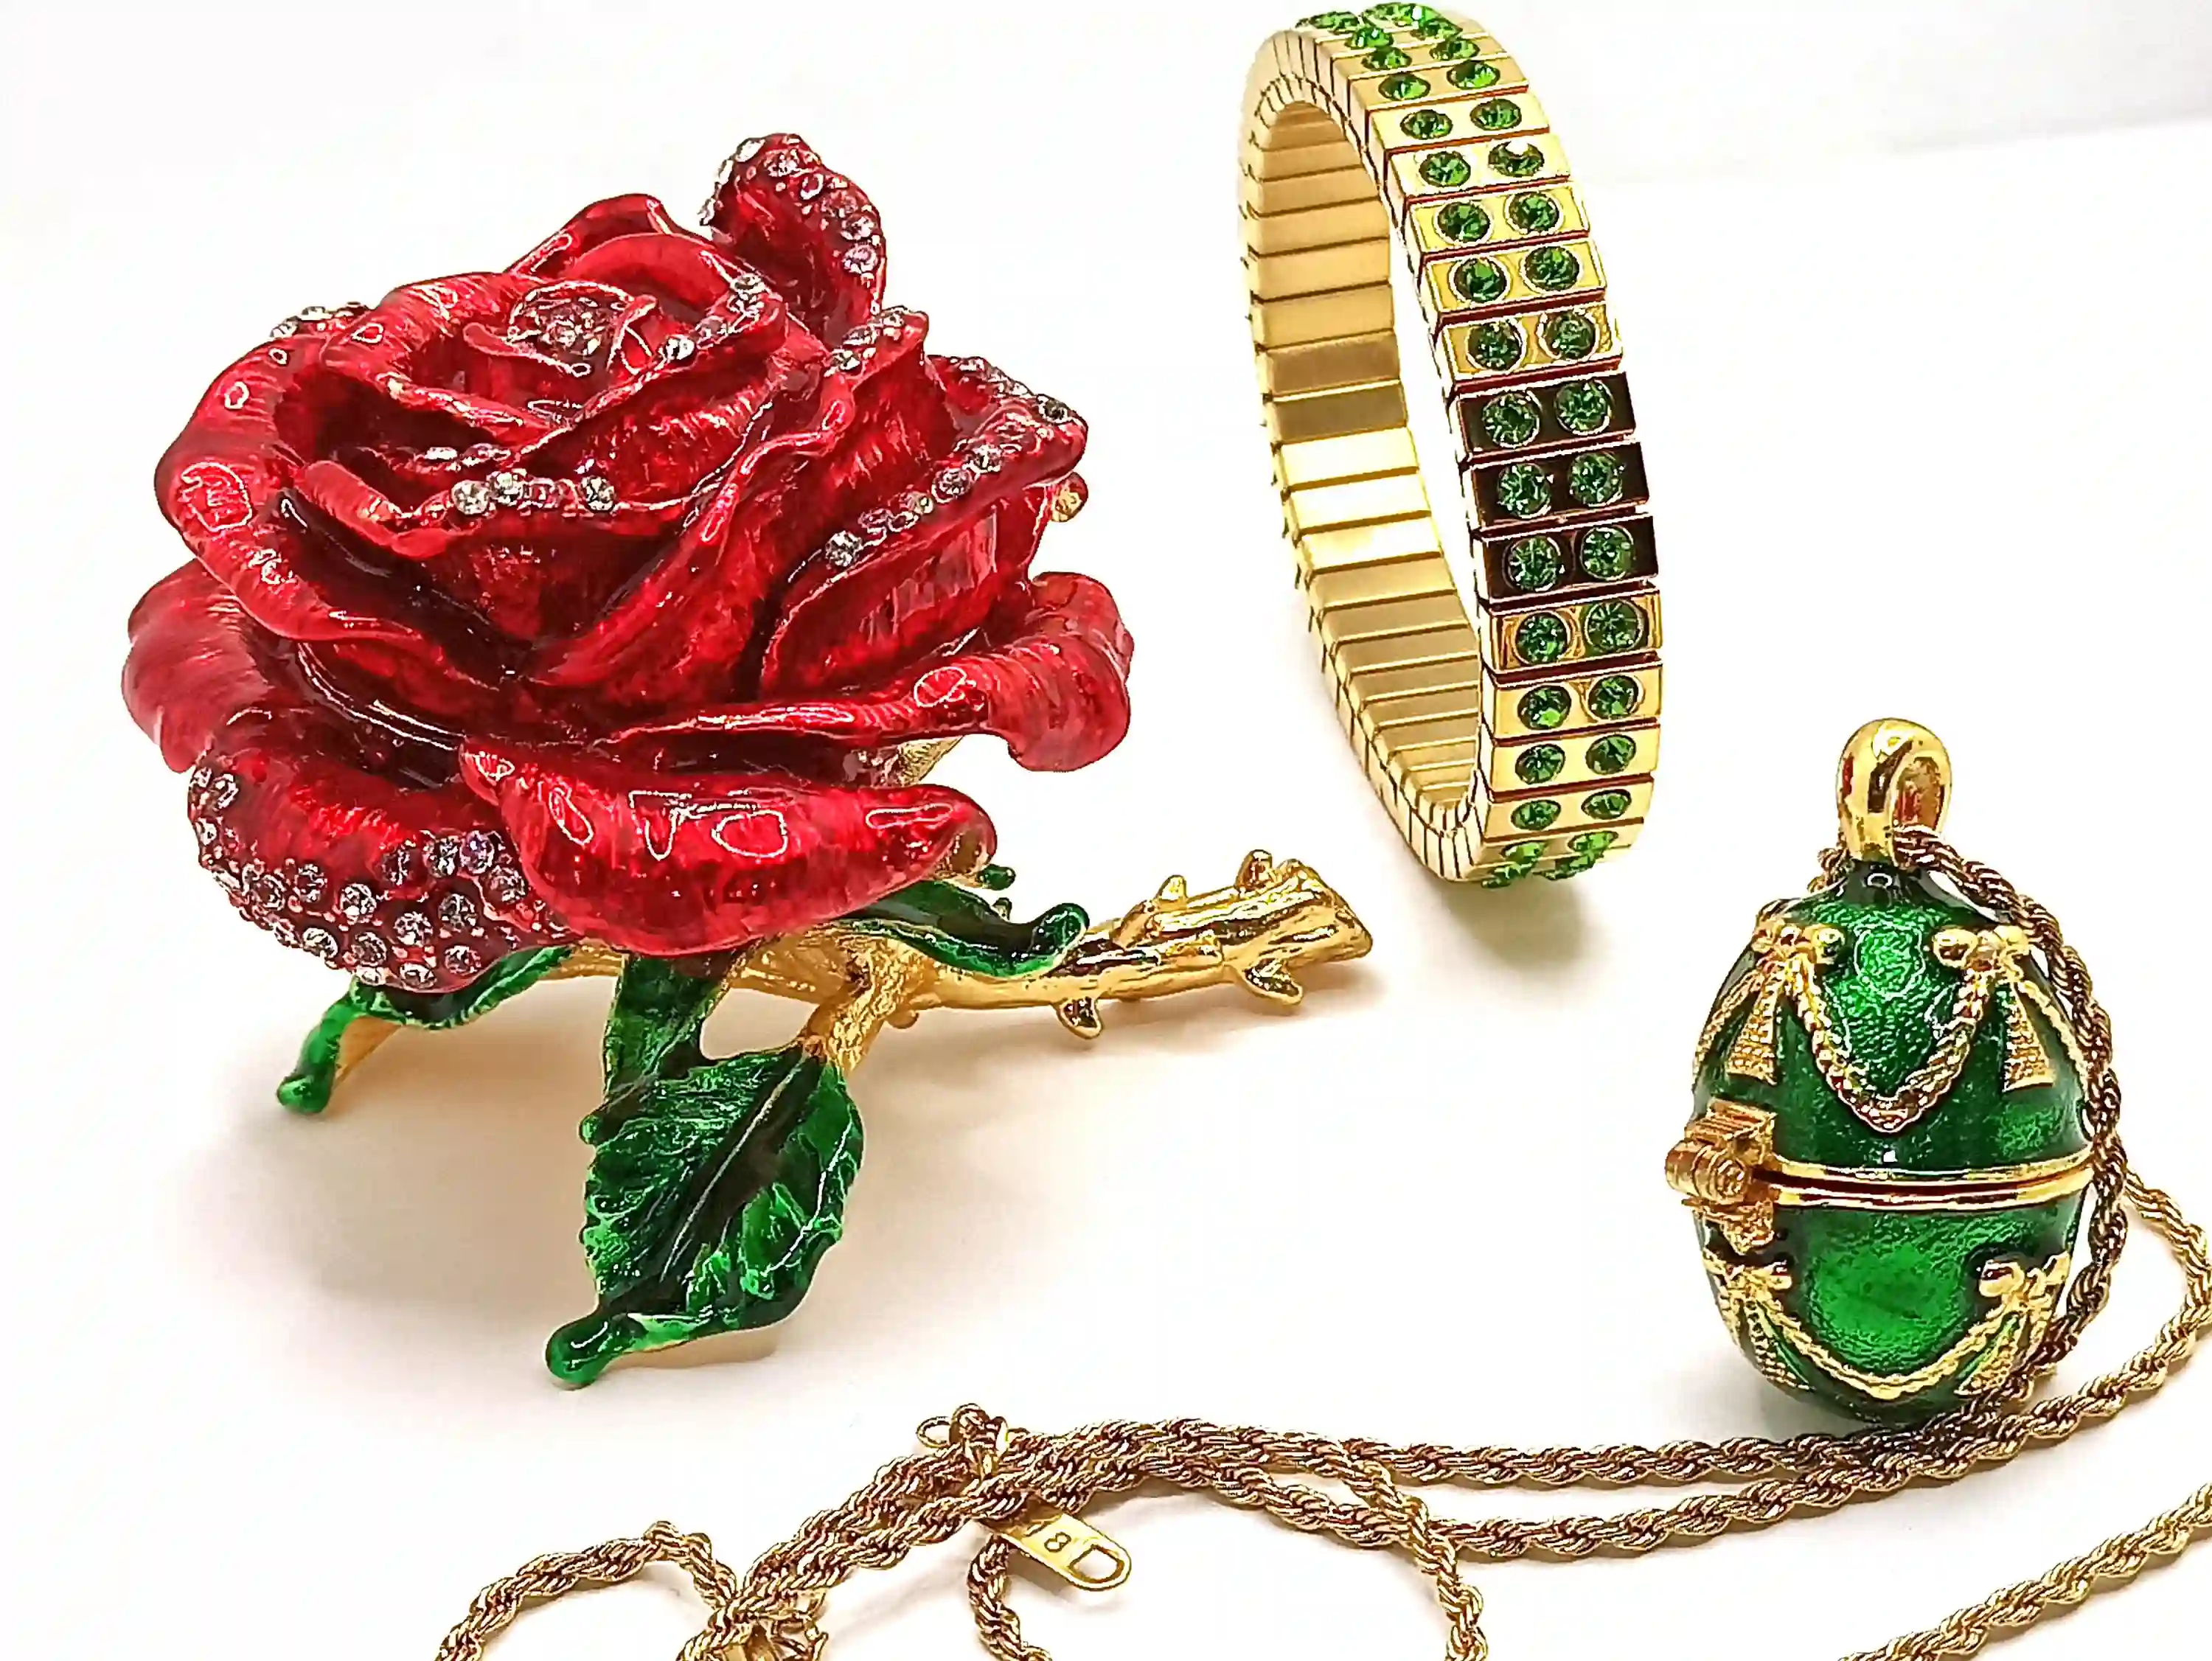 24k Gold, 7ct SET, Faberge Egg Pendant Gold, Green Luxury Bracelet, Faberge egg, Faberge egg Jewelry Box, PERIDOT gifts for women, HANDMADE 